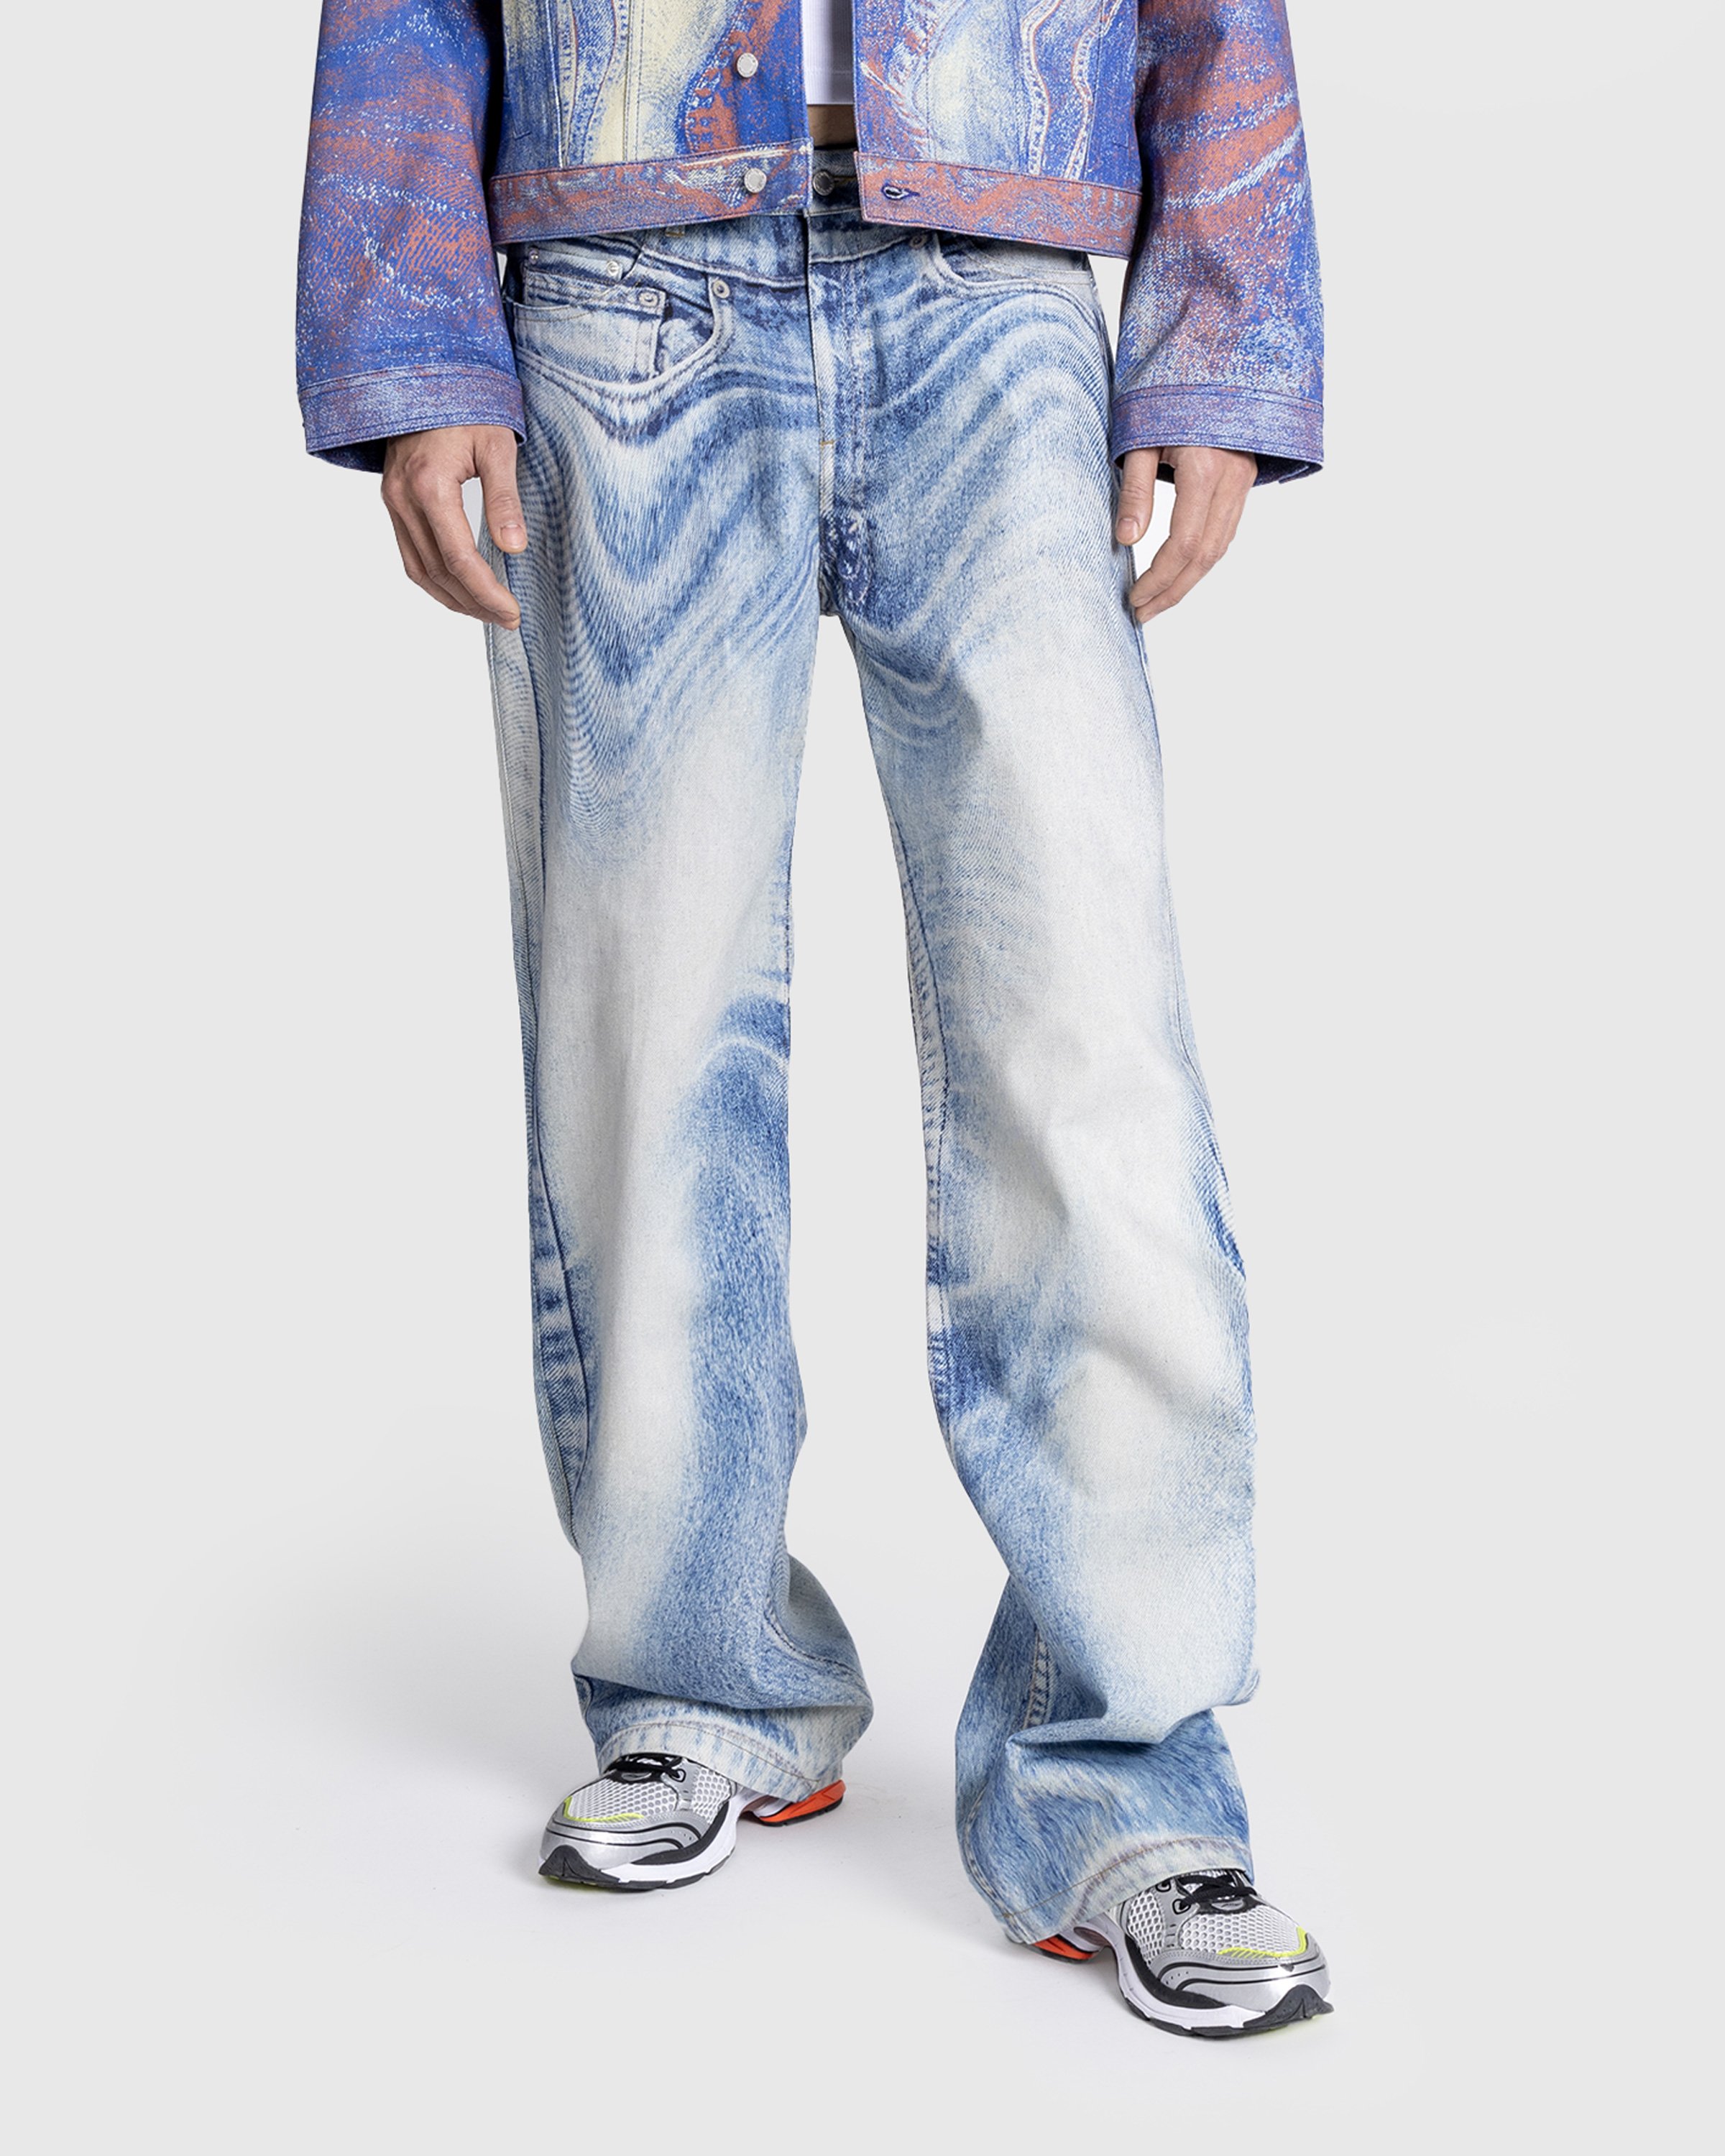 CAMPERLAB - Jeans - Clothing - Multi - Image 2